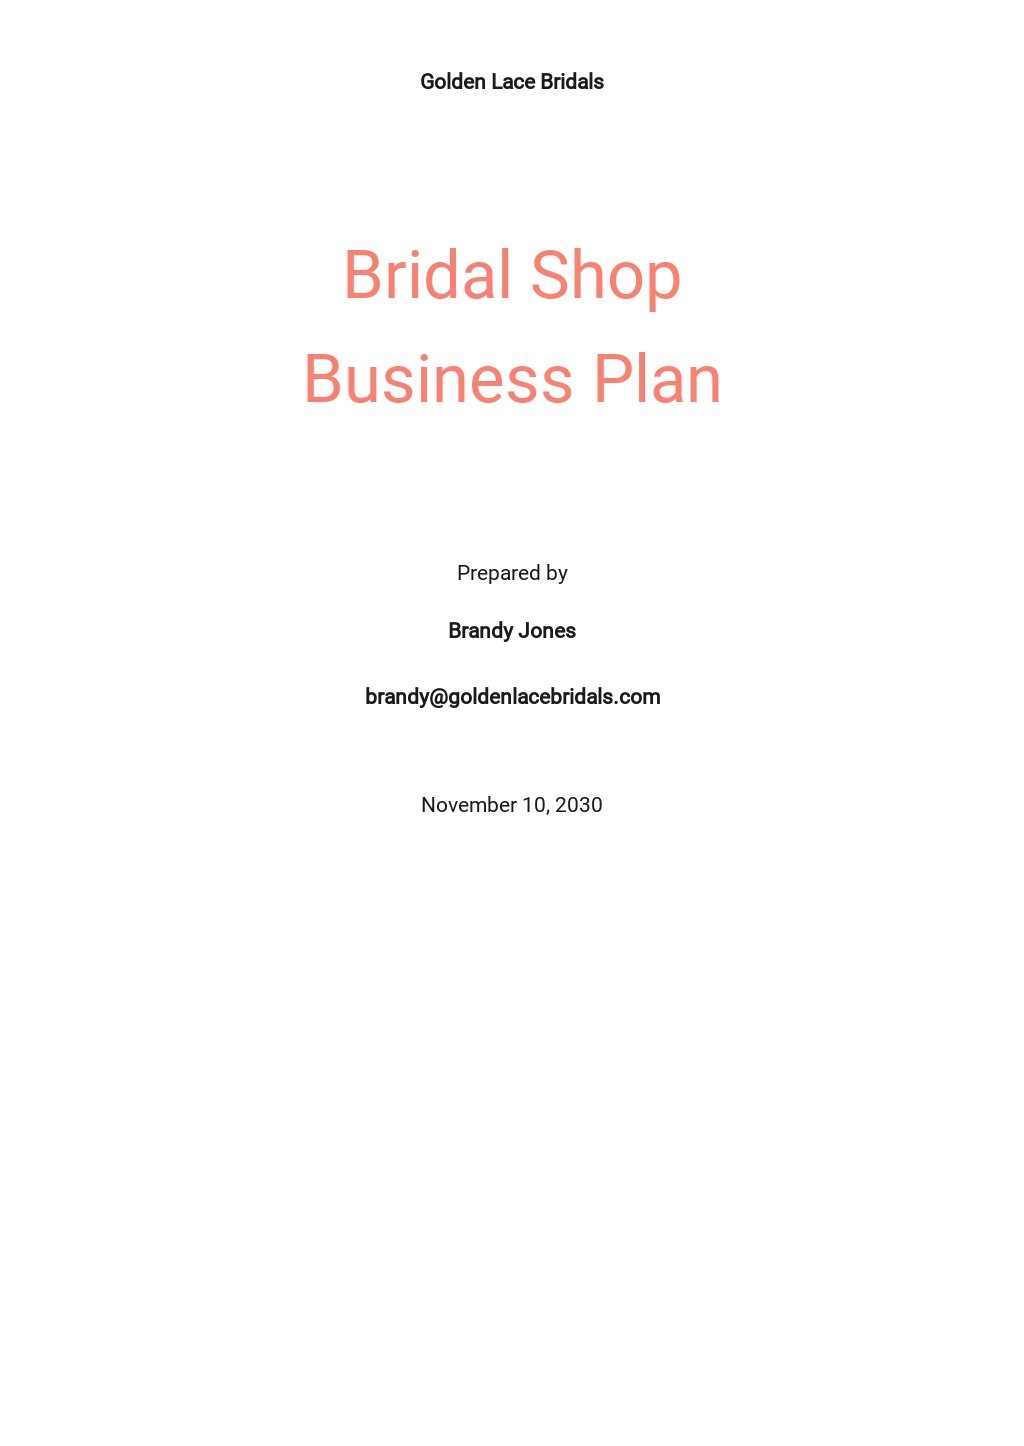 print and copy shop business plan